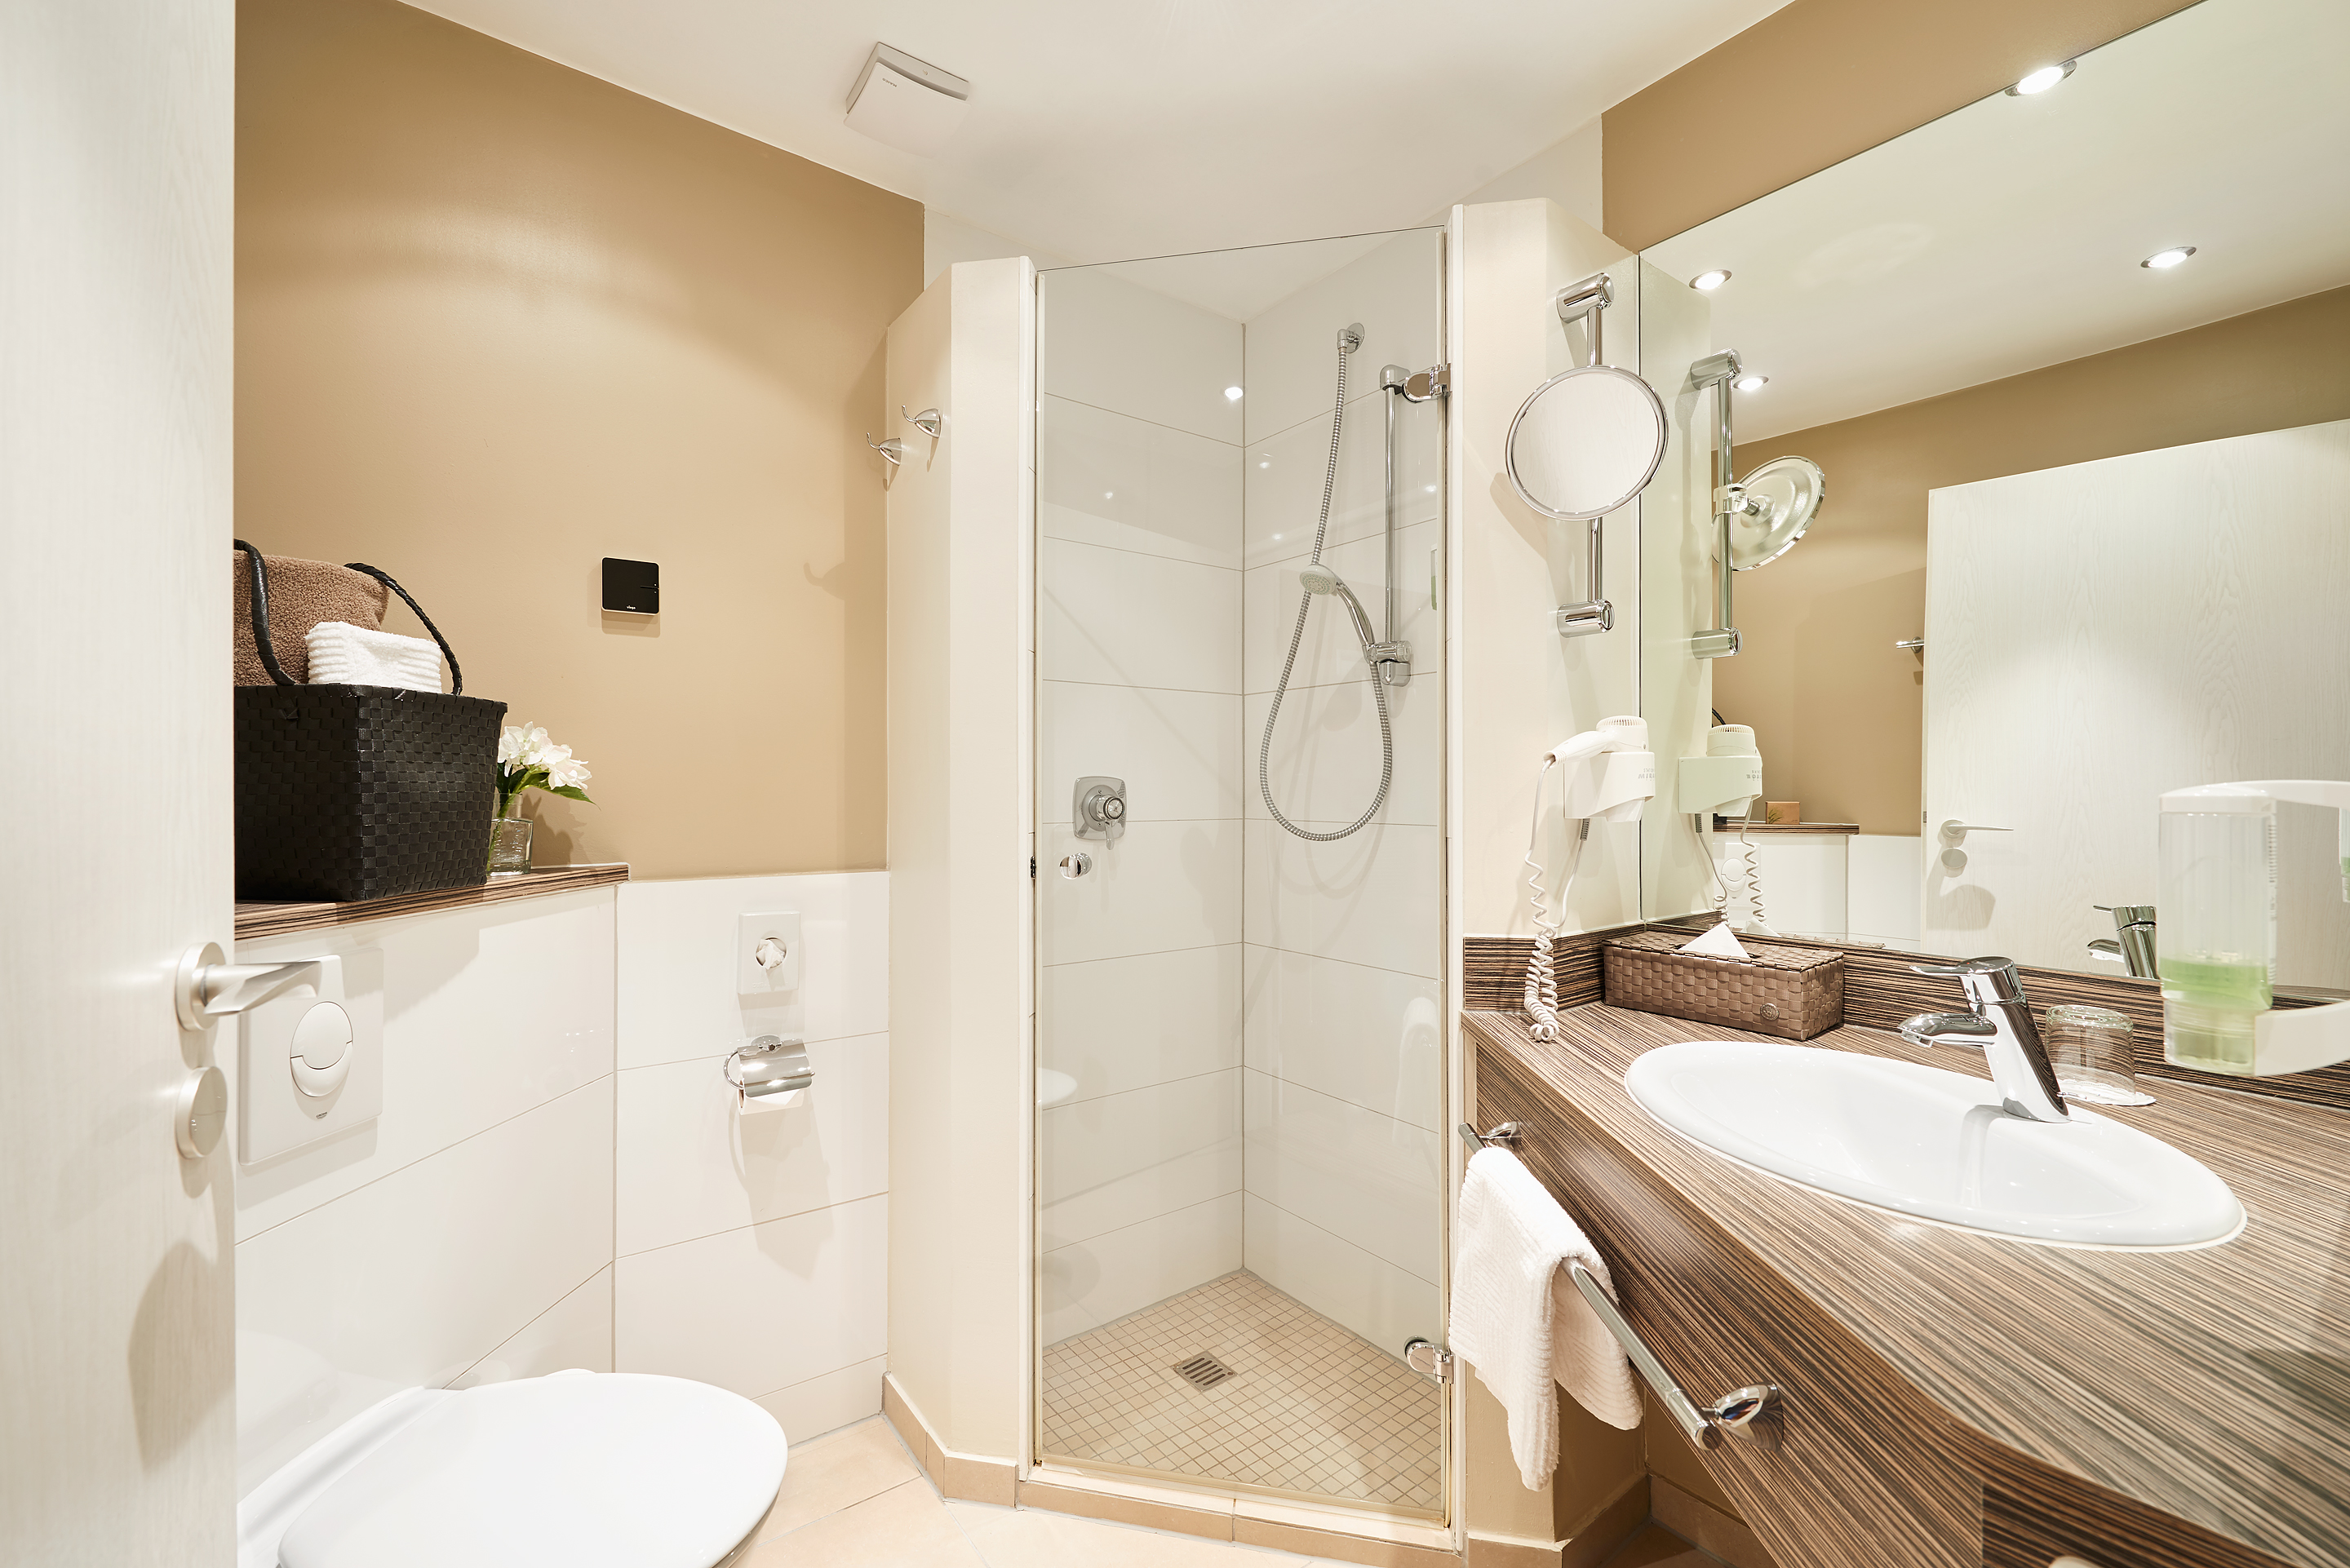 Auszeit category room - Bathroom - Hotel Munte am Stadtwald - Bremen